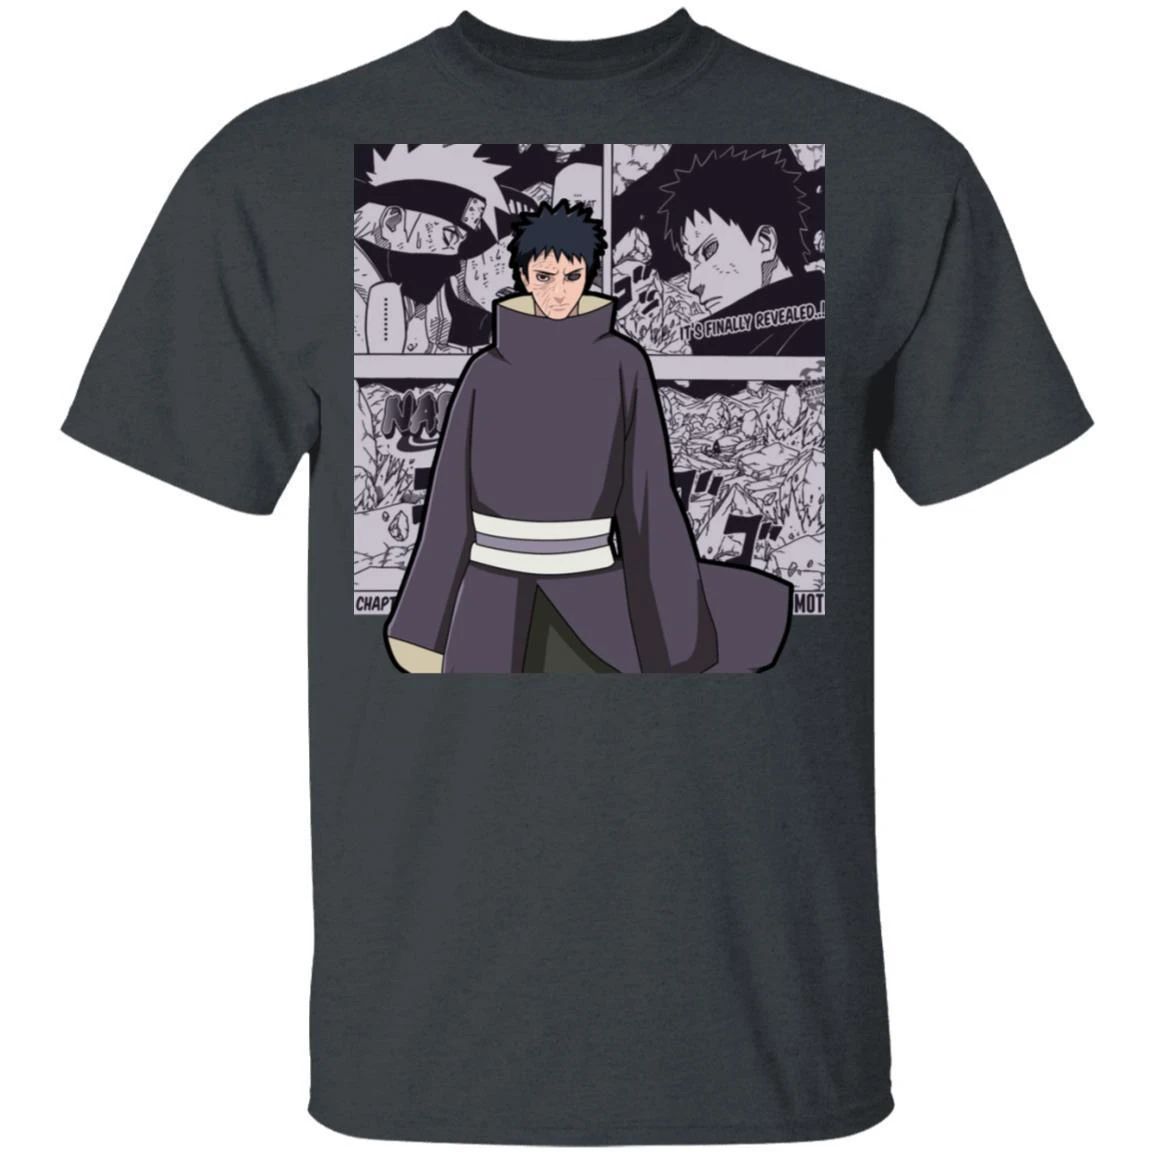 Naruto Obito Uchiha Shirt Anime Character Mix Manga Style Tee